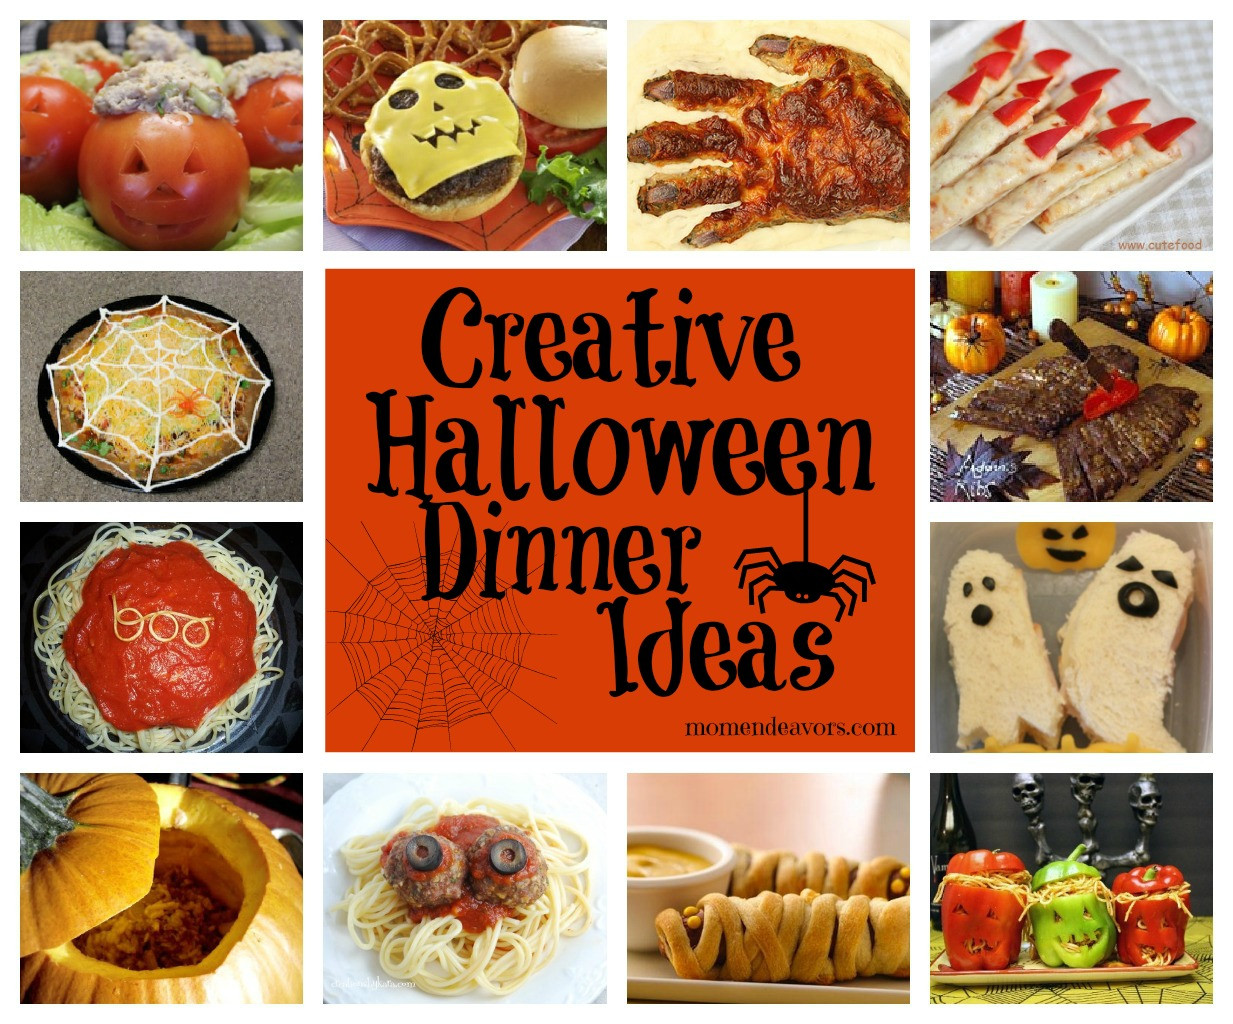 Creative Halloween Food Ideas
 15 Creative Halloween Dinner Ideas